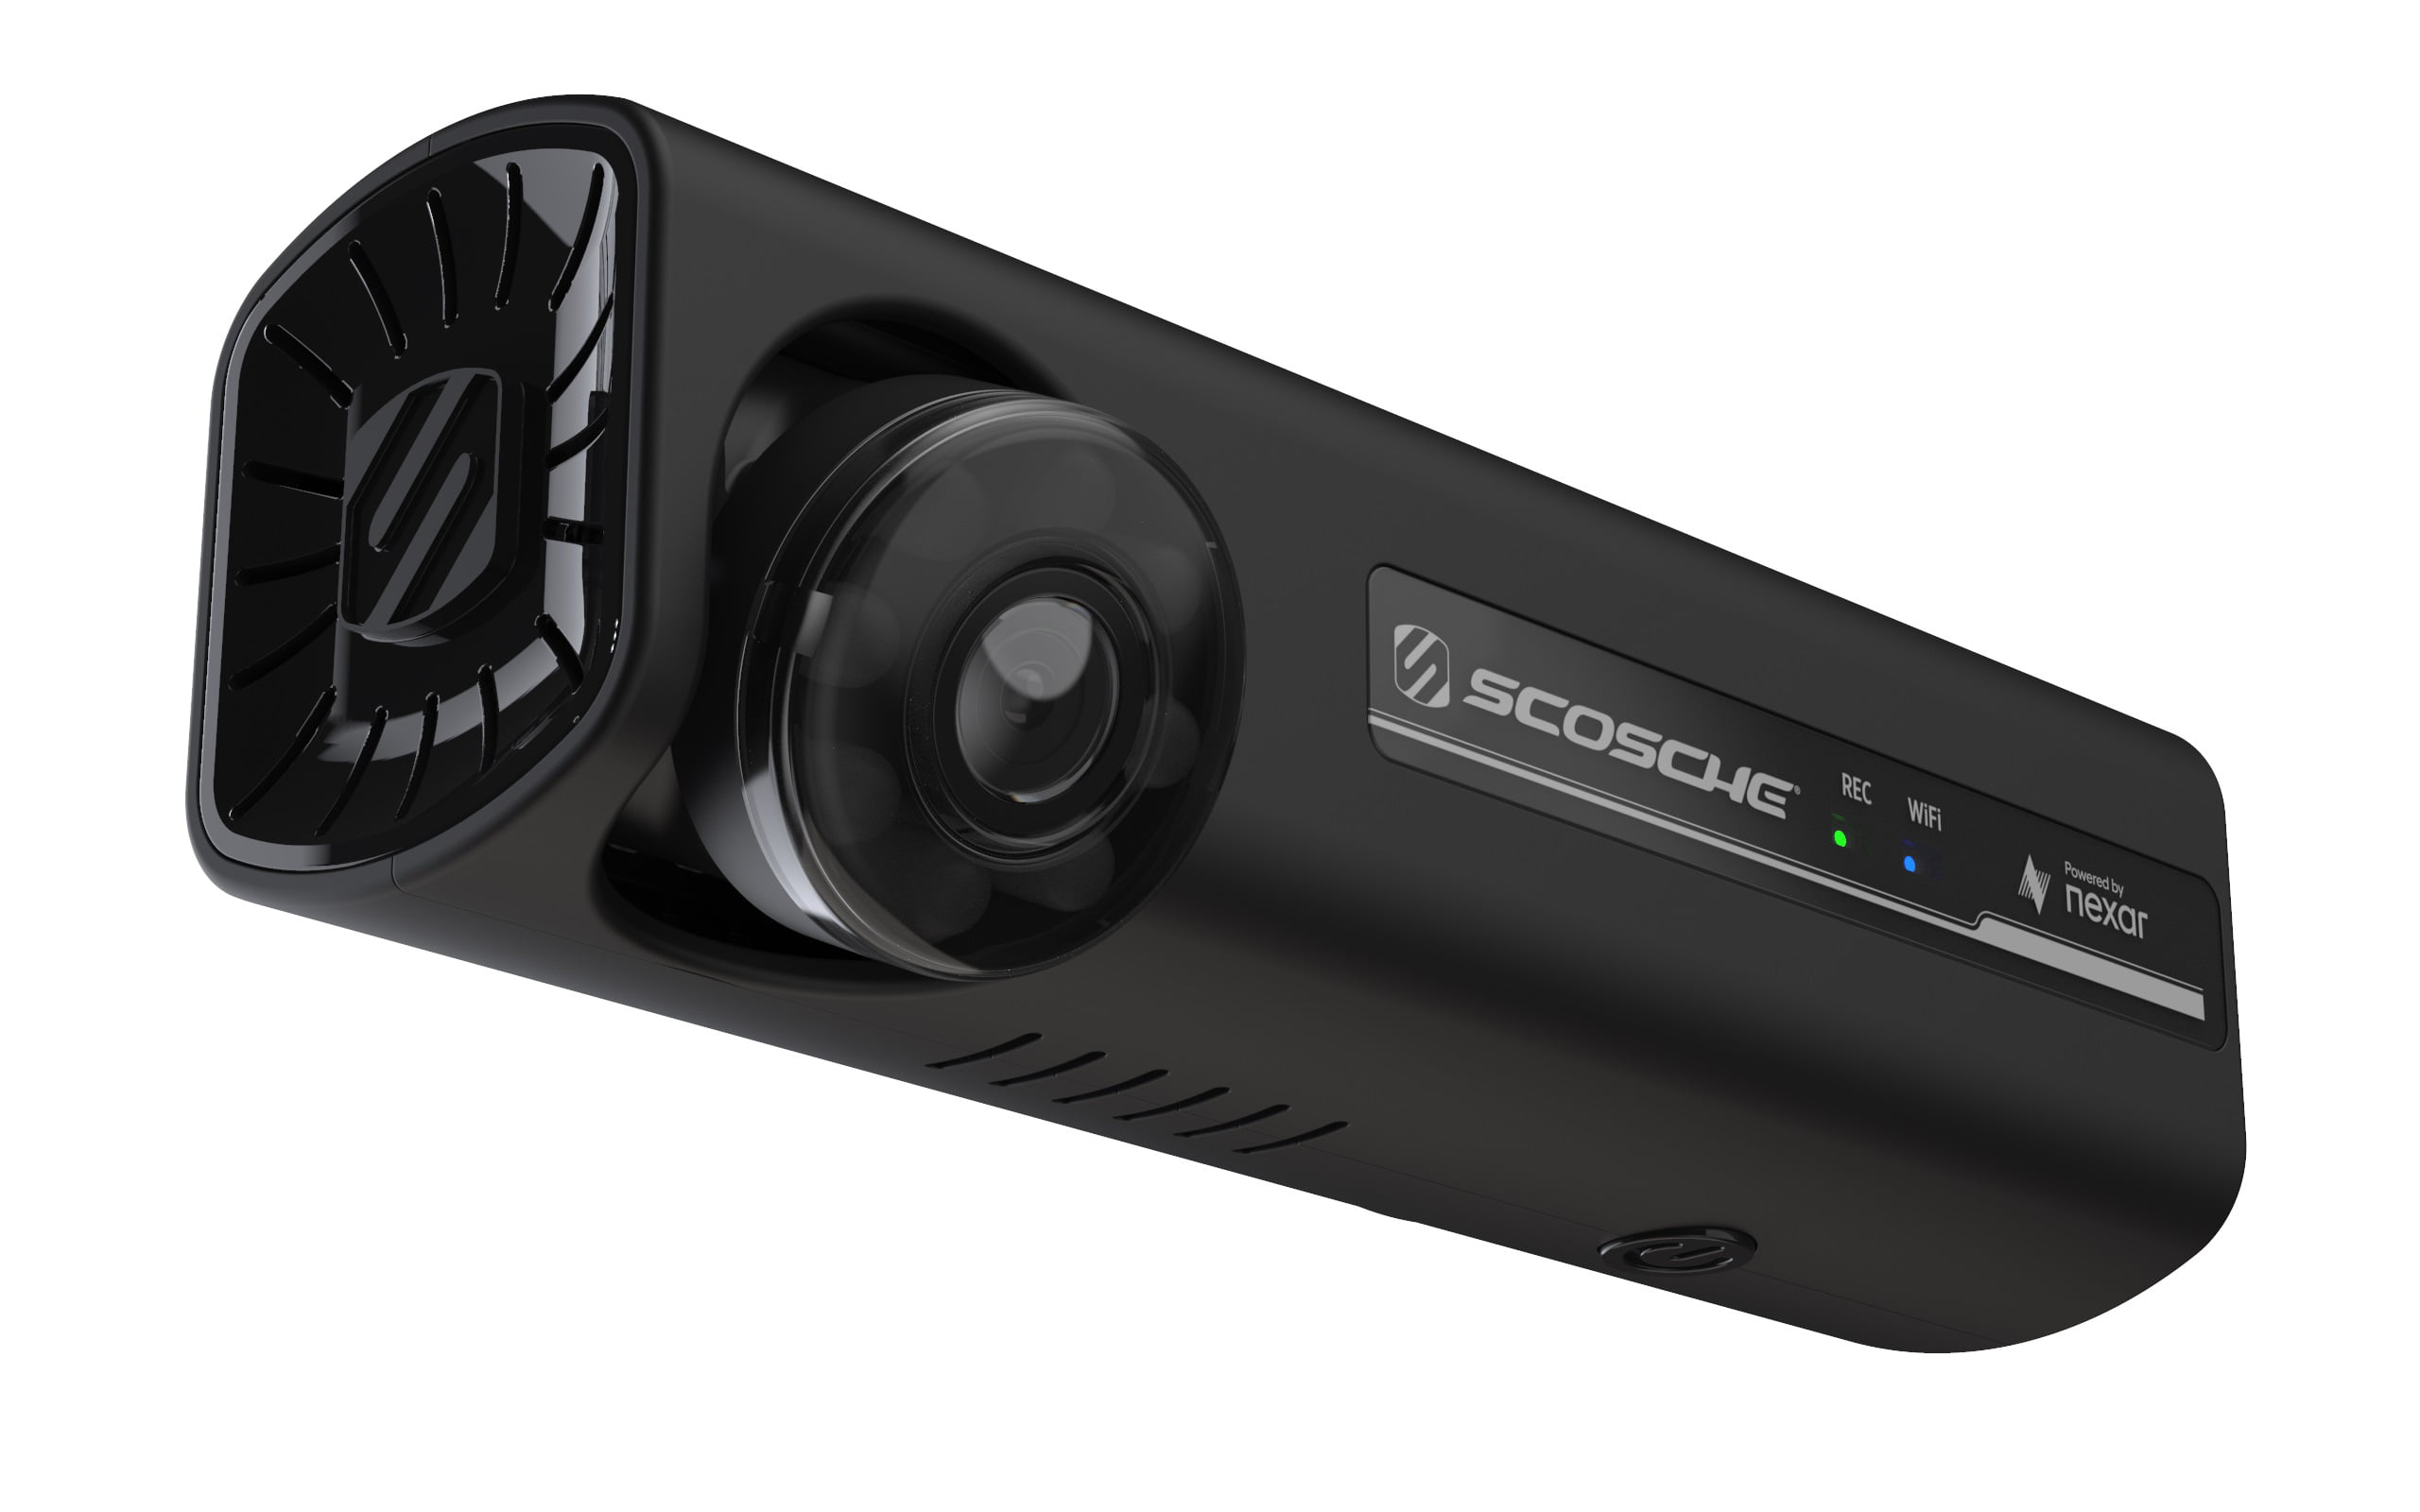 SCOSCHE NEXC2128-XCES0 Full HD Two-Way Smart Dash Cam Powered by